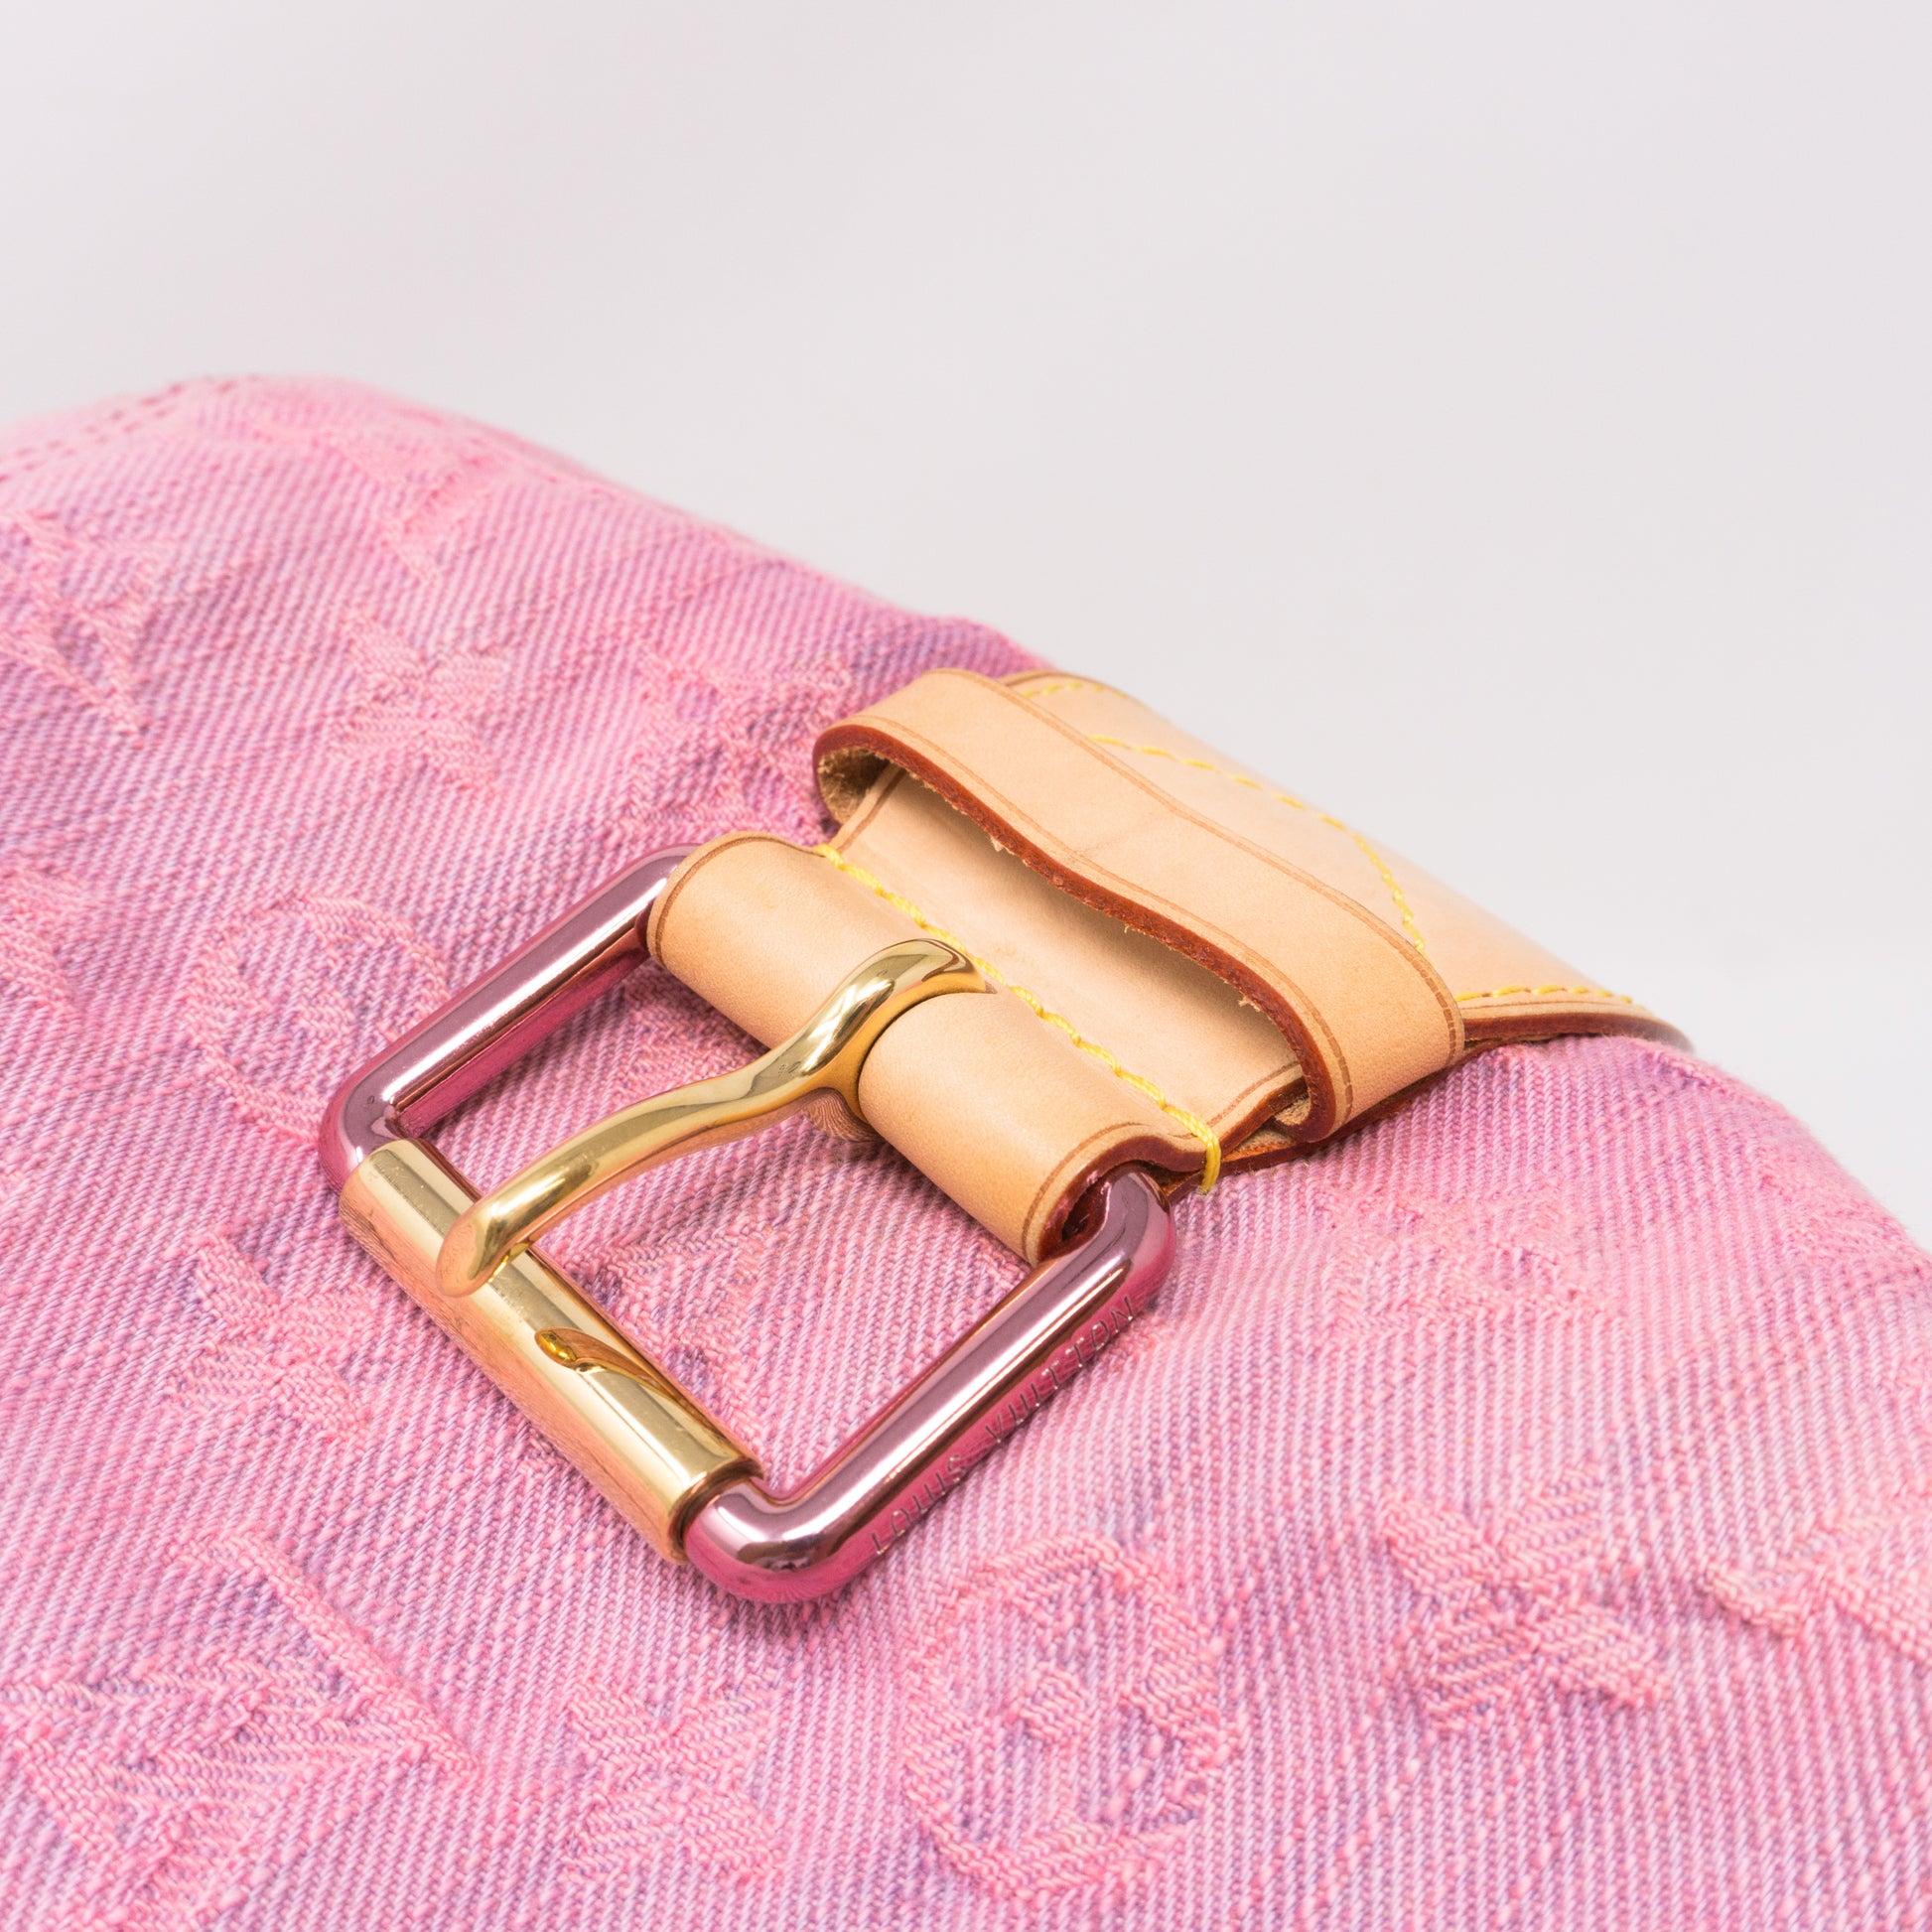 LOUIS VUITTON, a Monogram Denim Sunshine Pink shoulder bag, spring 2010.  - Bukowskis